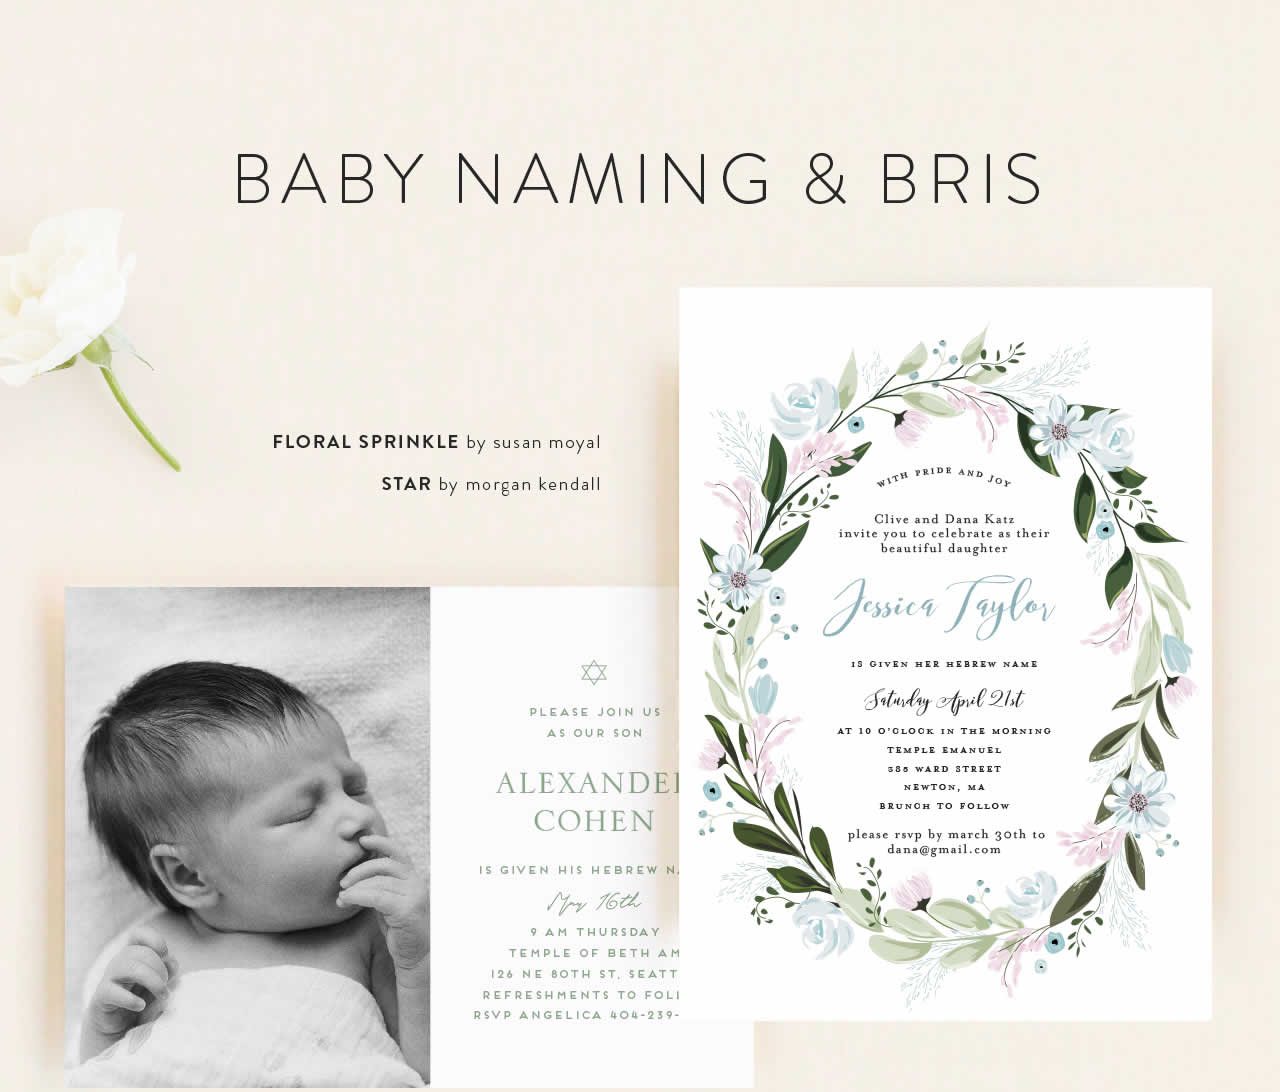 Baby Naming and Bris